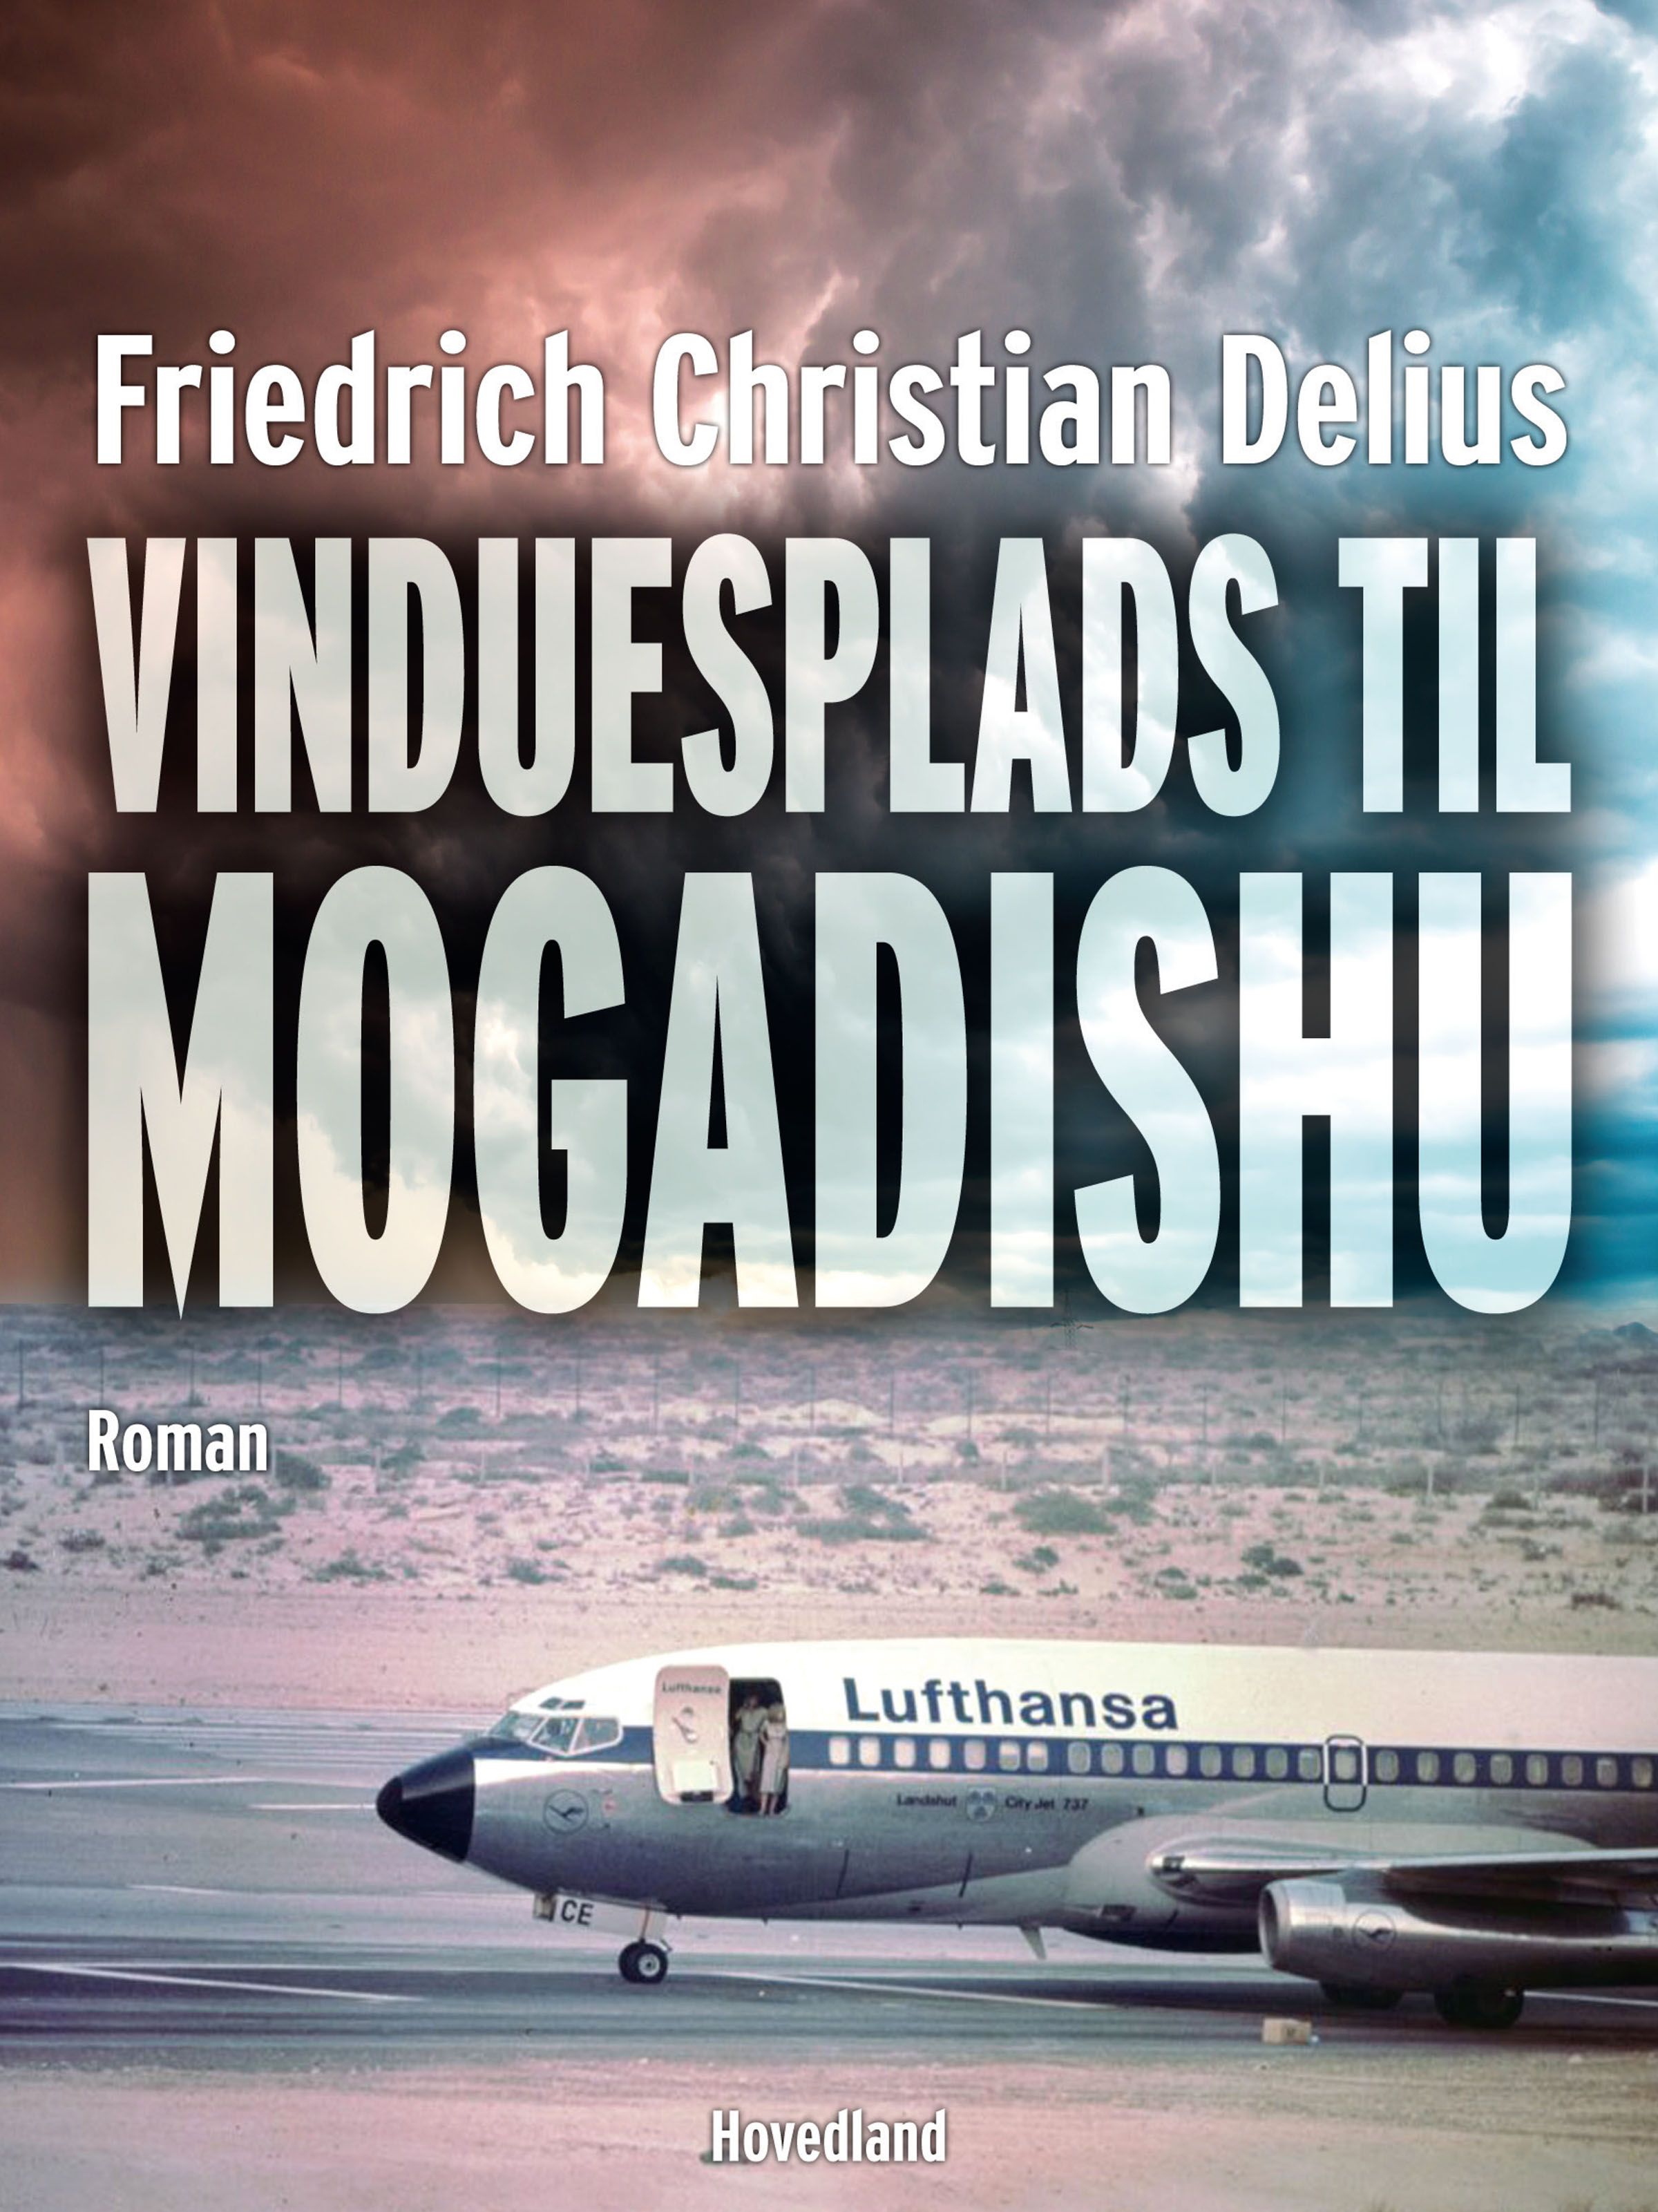 Vinduesplads Mogadishu, e-bog af Friedrich Christian Delius